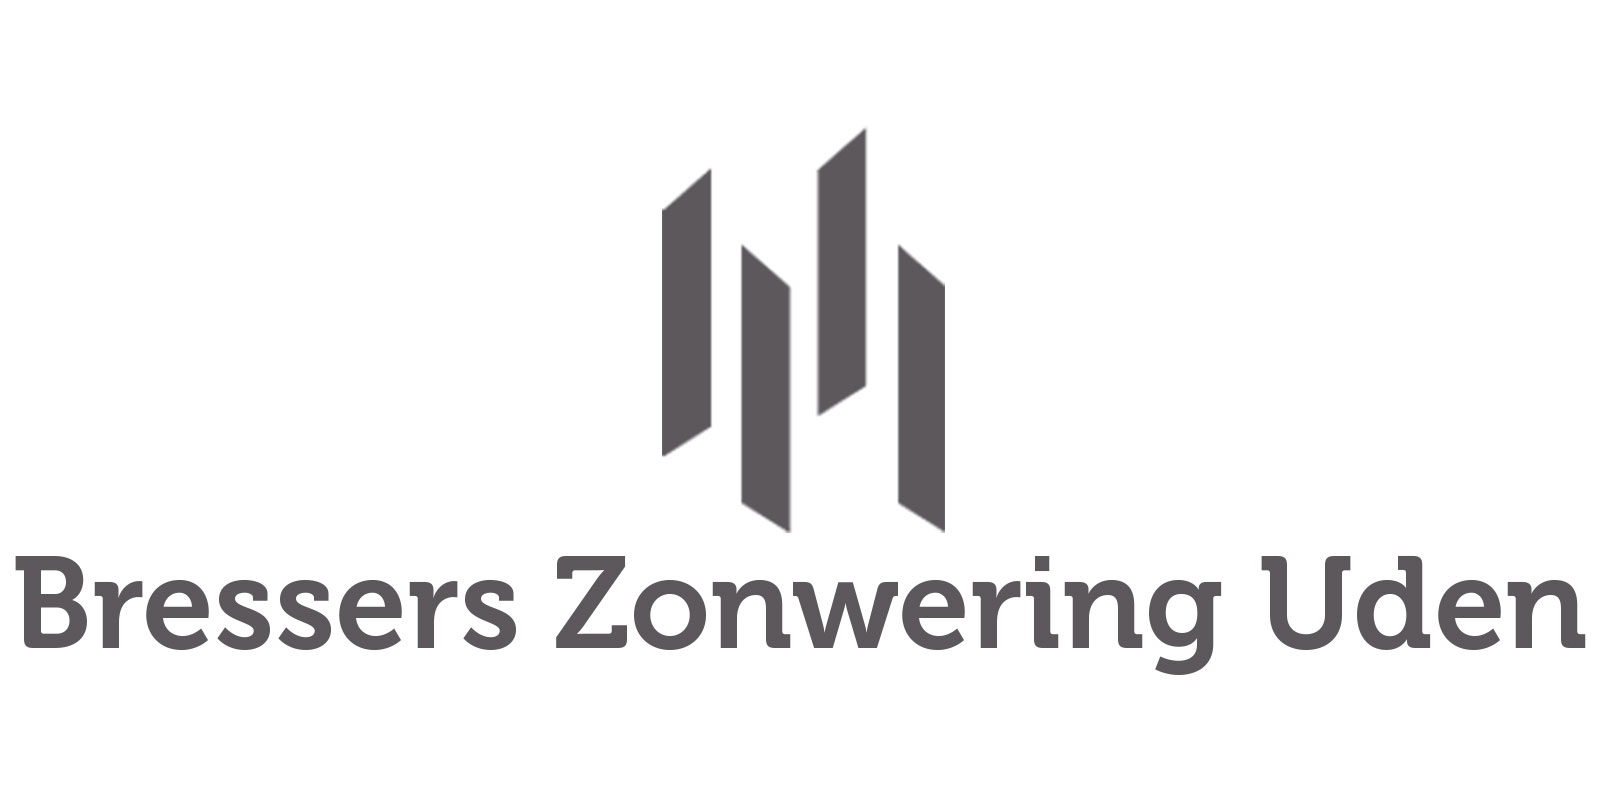 Bressers Zonwering logo